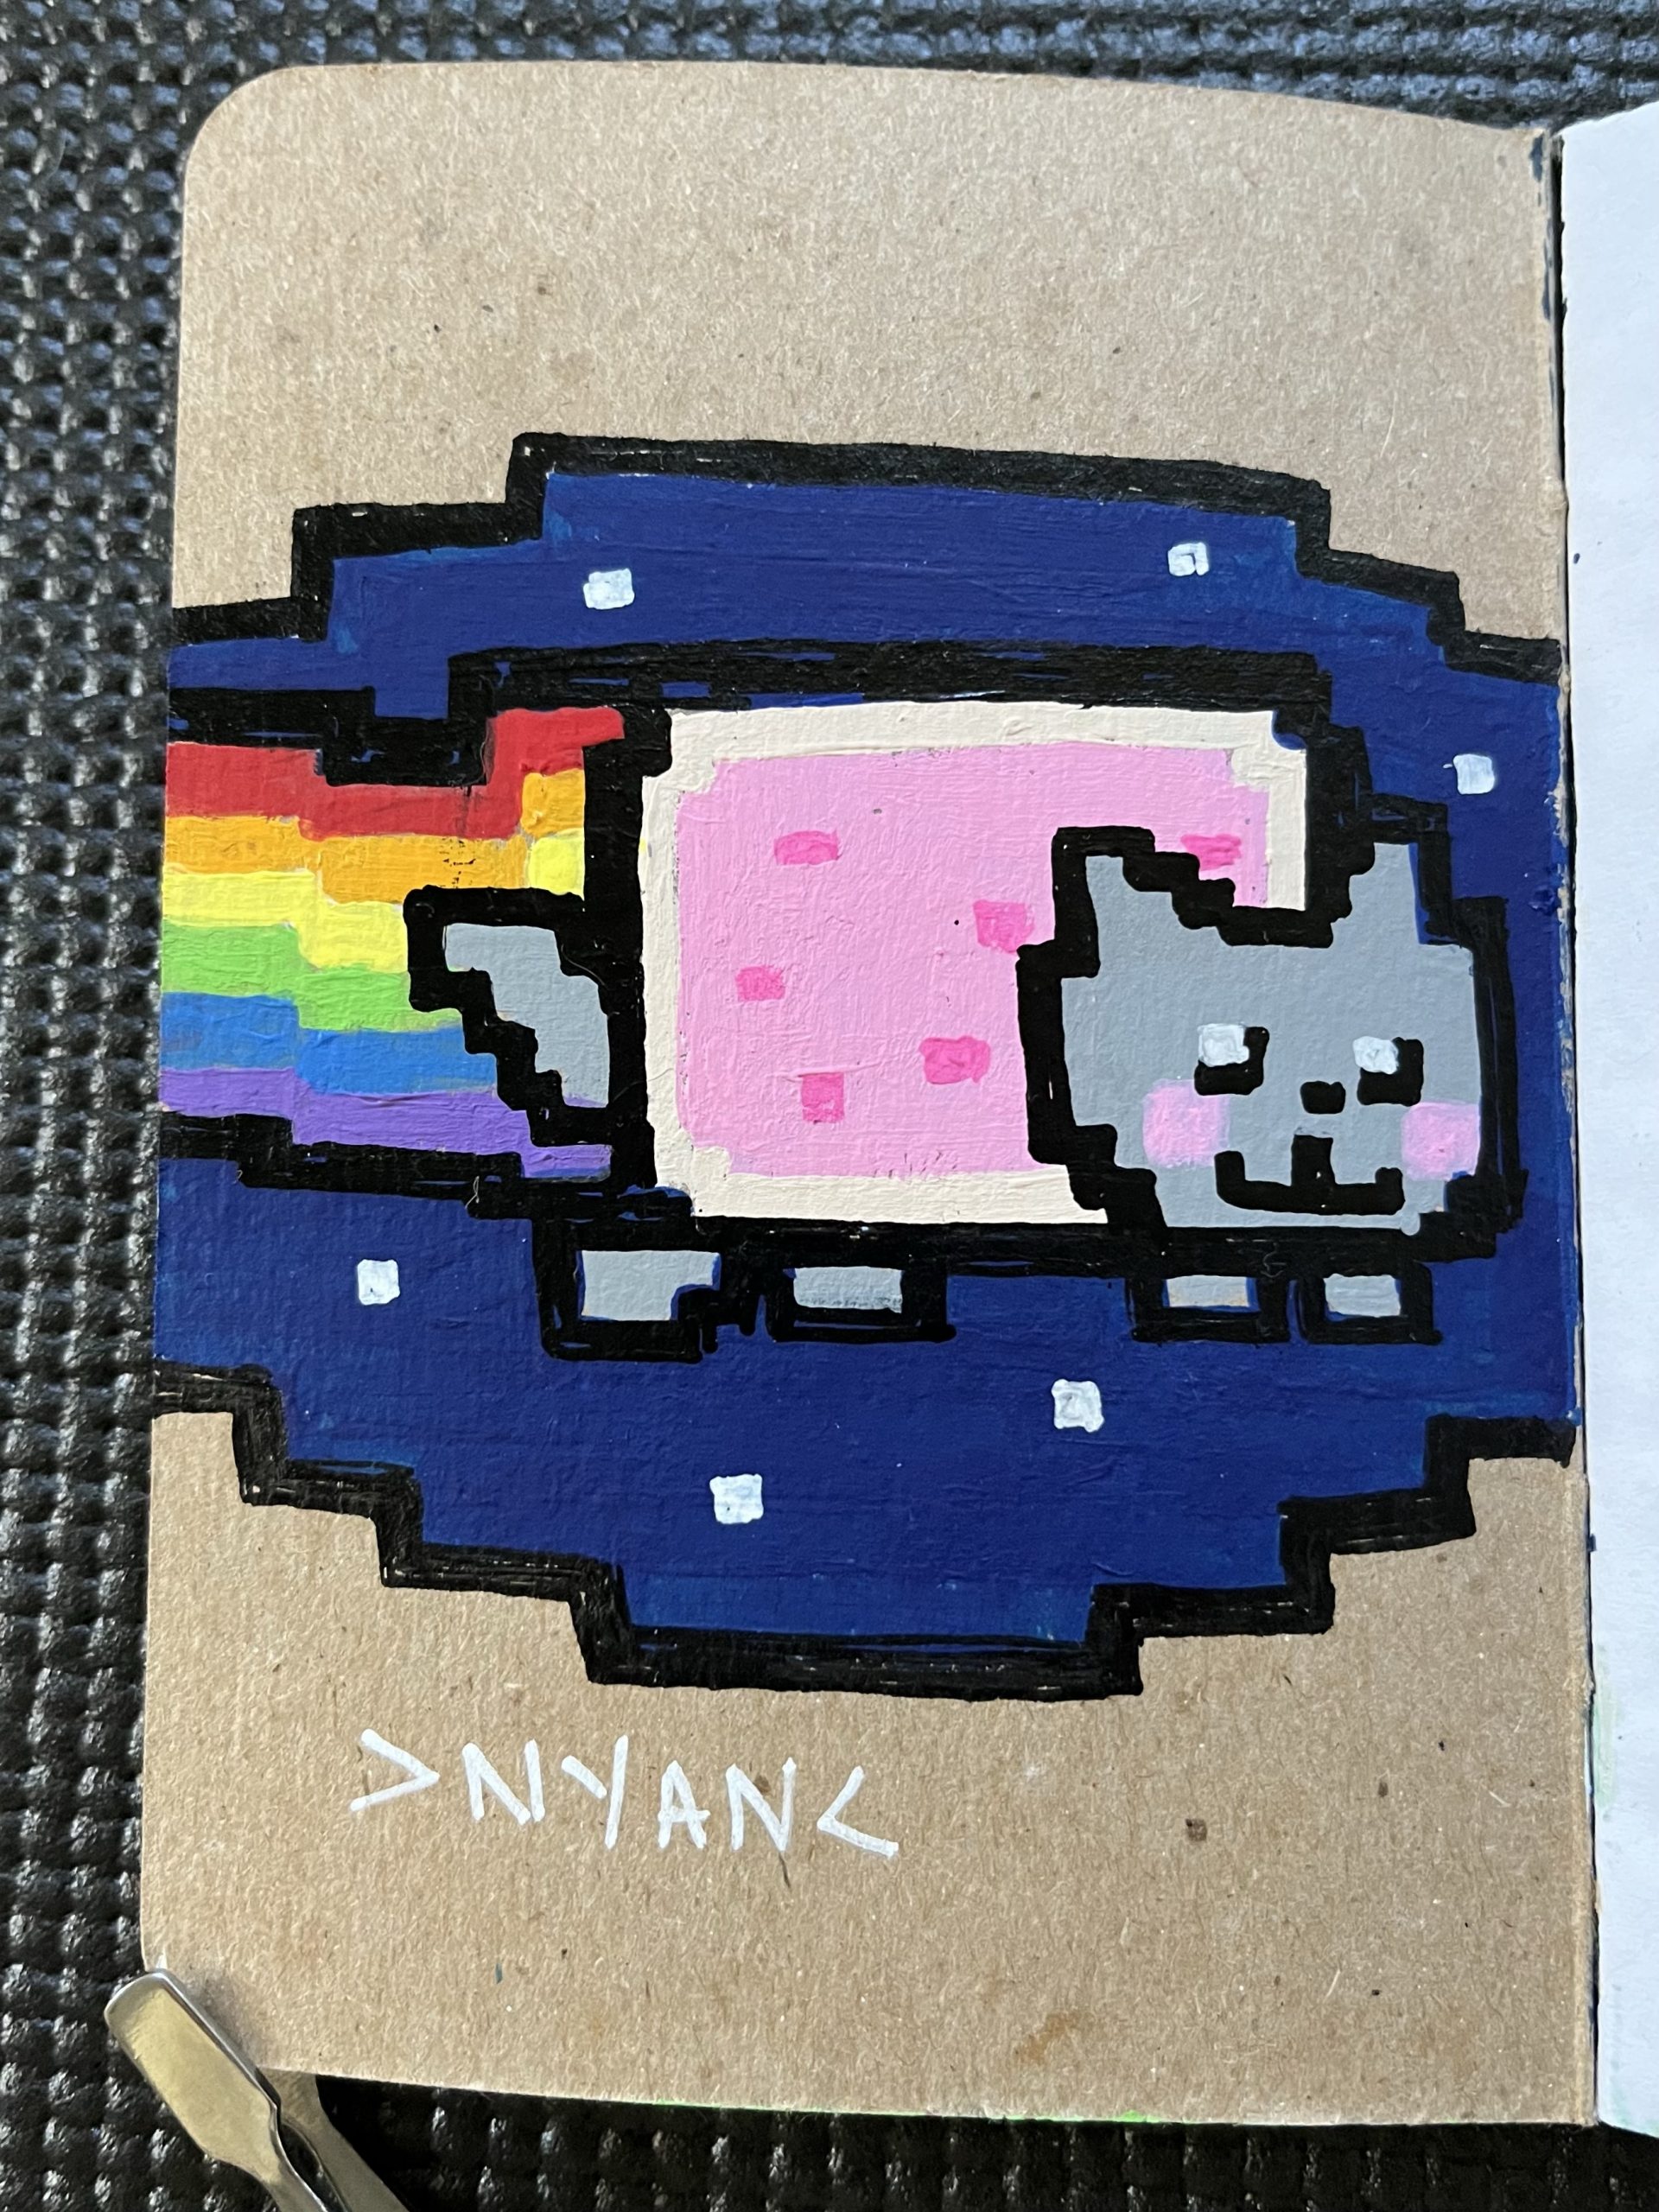 A painting of Nyan cat